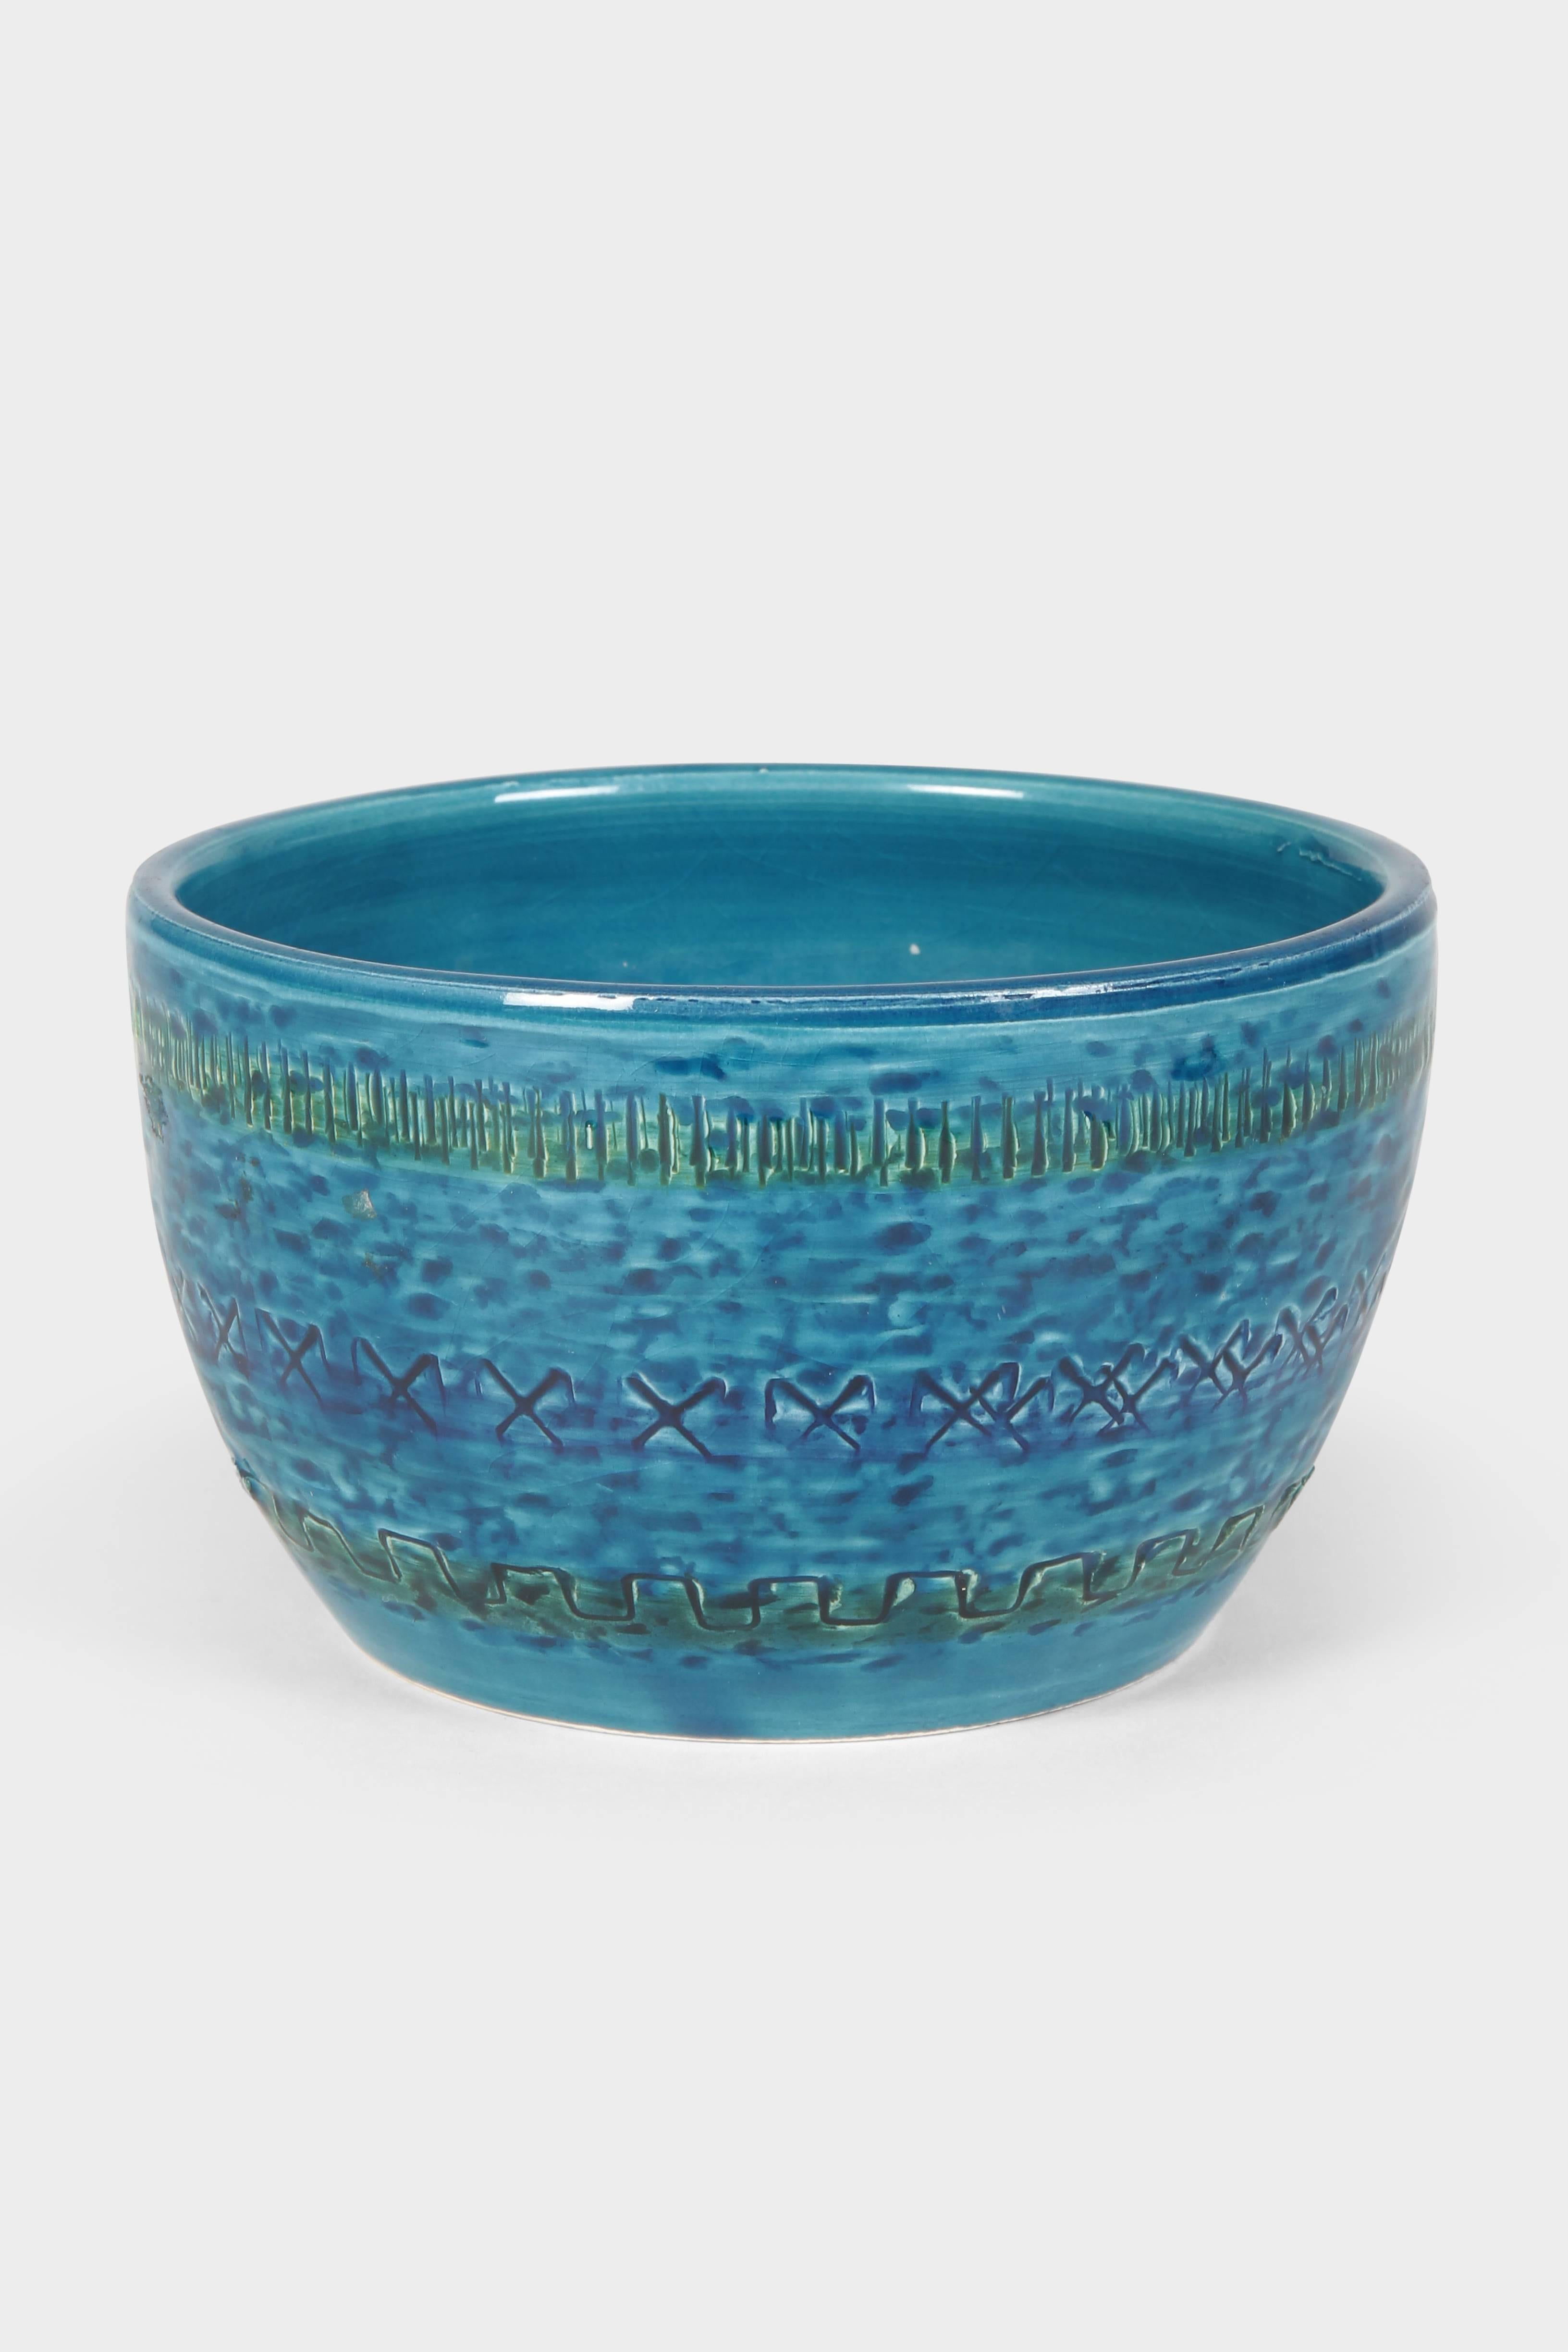 Ceramic Aldo Londi “Rimini Blu” Bowls Bitossi, 1960s